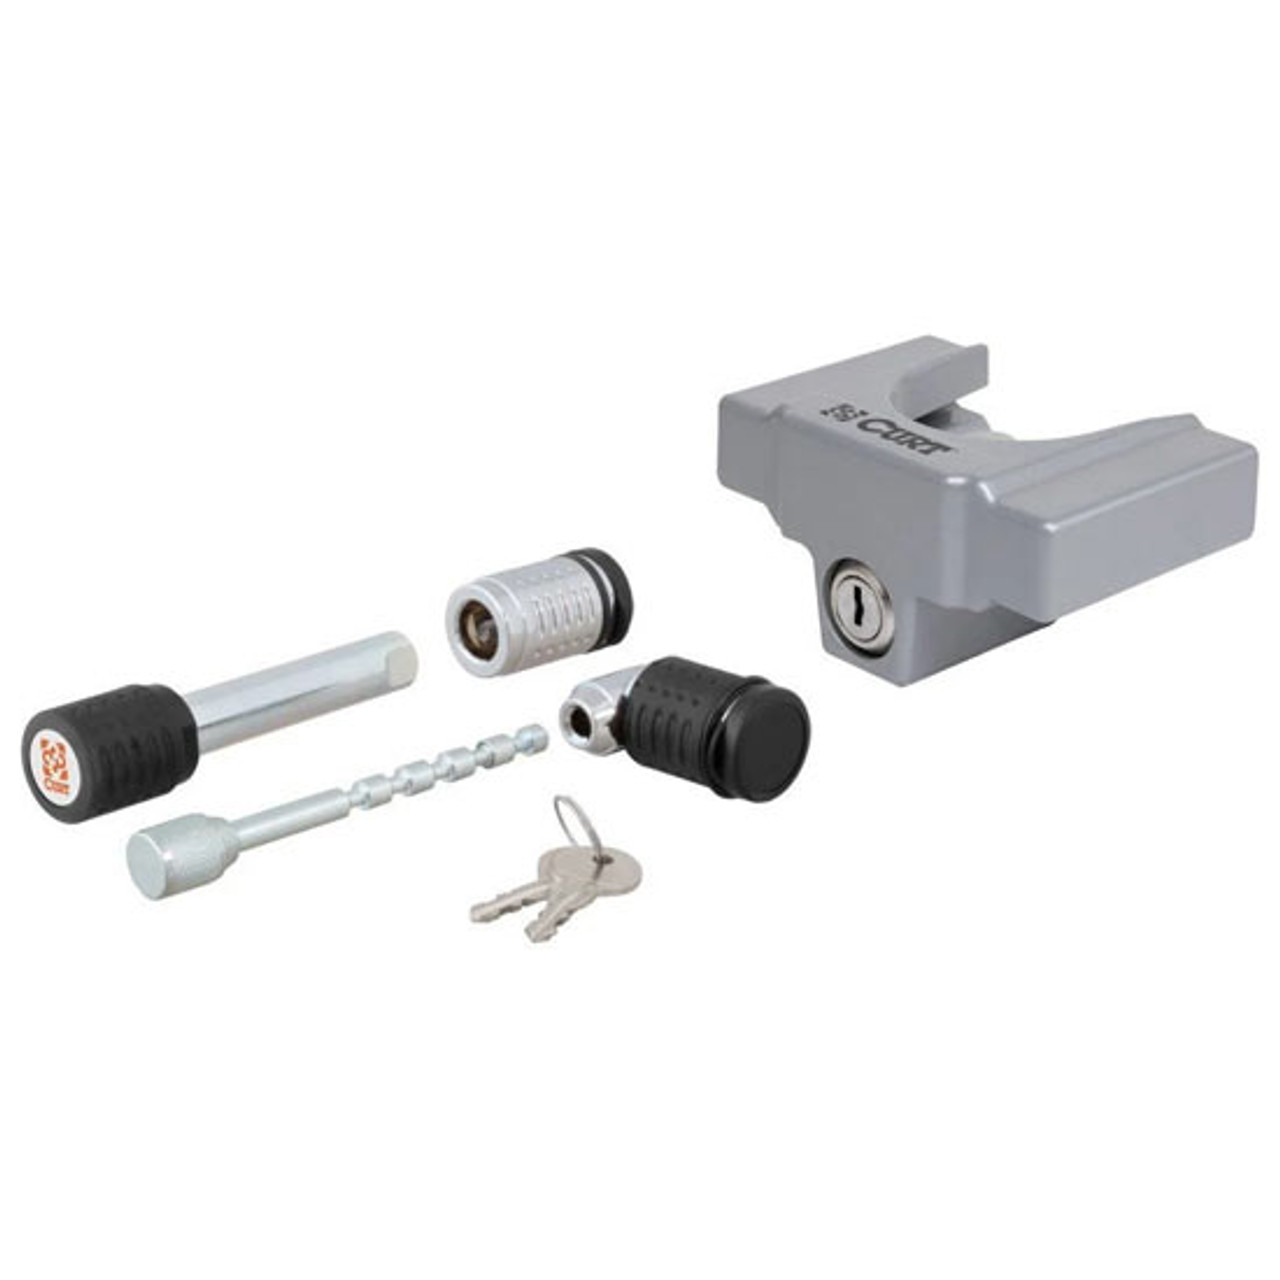 5/8 Inch Hitch Pin & Coupler Latch Pin Locks Keyed Alike Kit